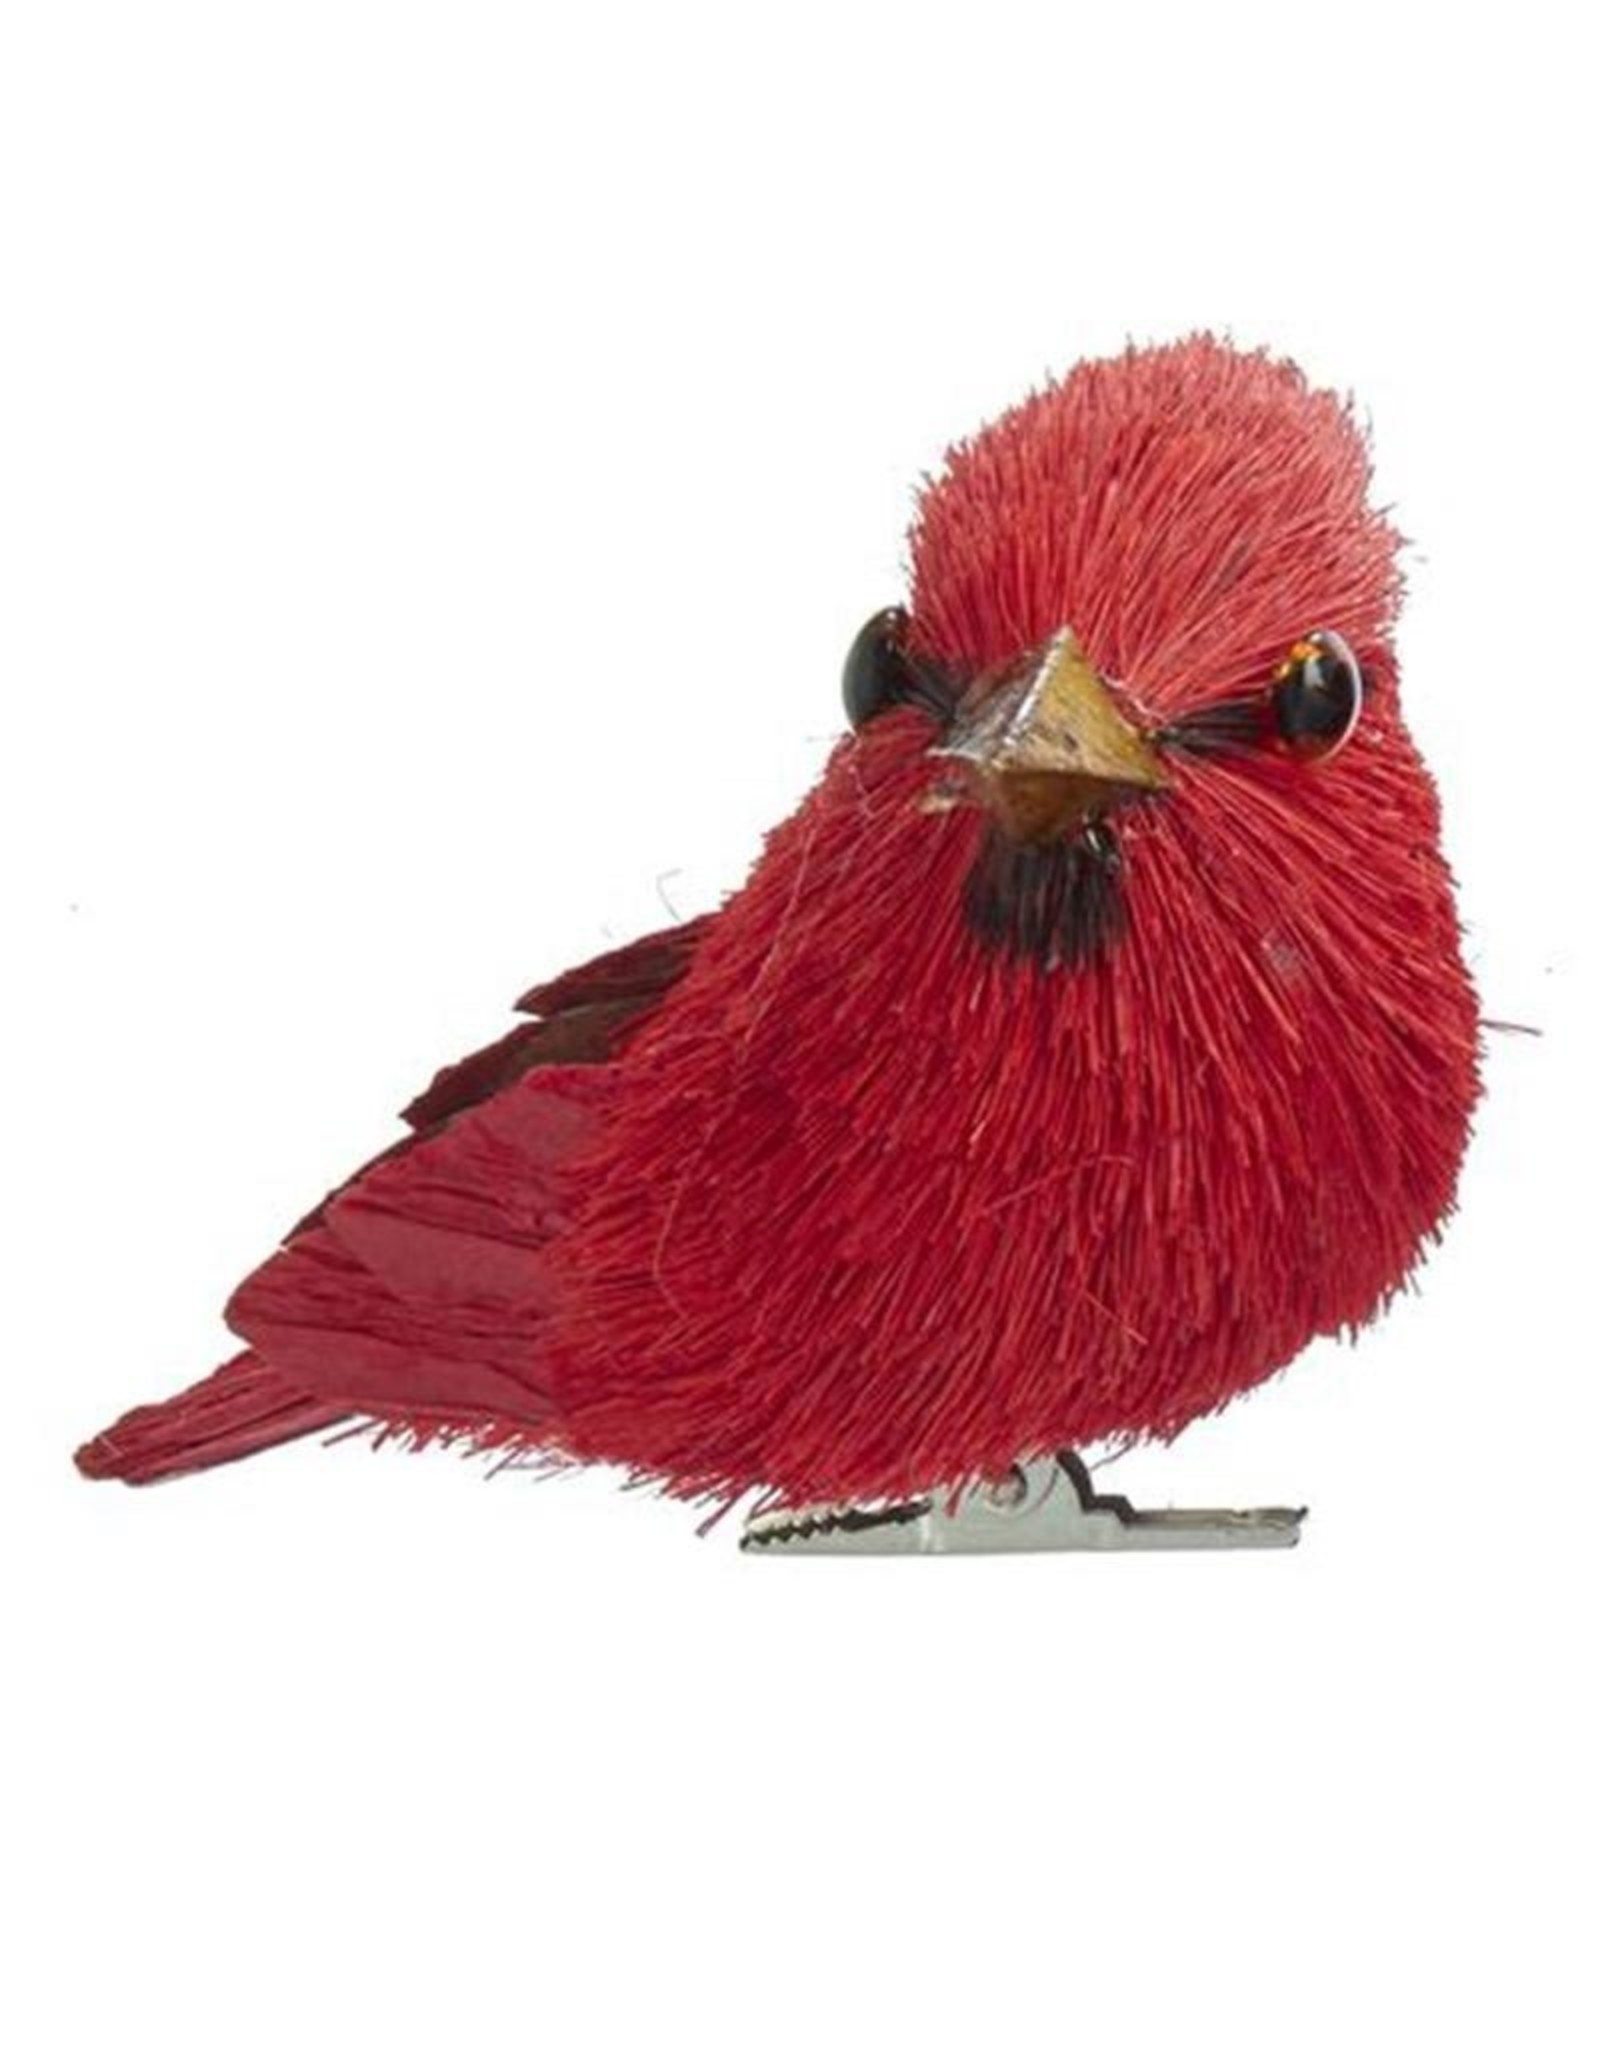 Kurt Adler Red Cardinal Sisal Bird With Clip Ornament 3 Inch LEFT